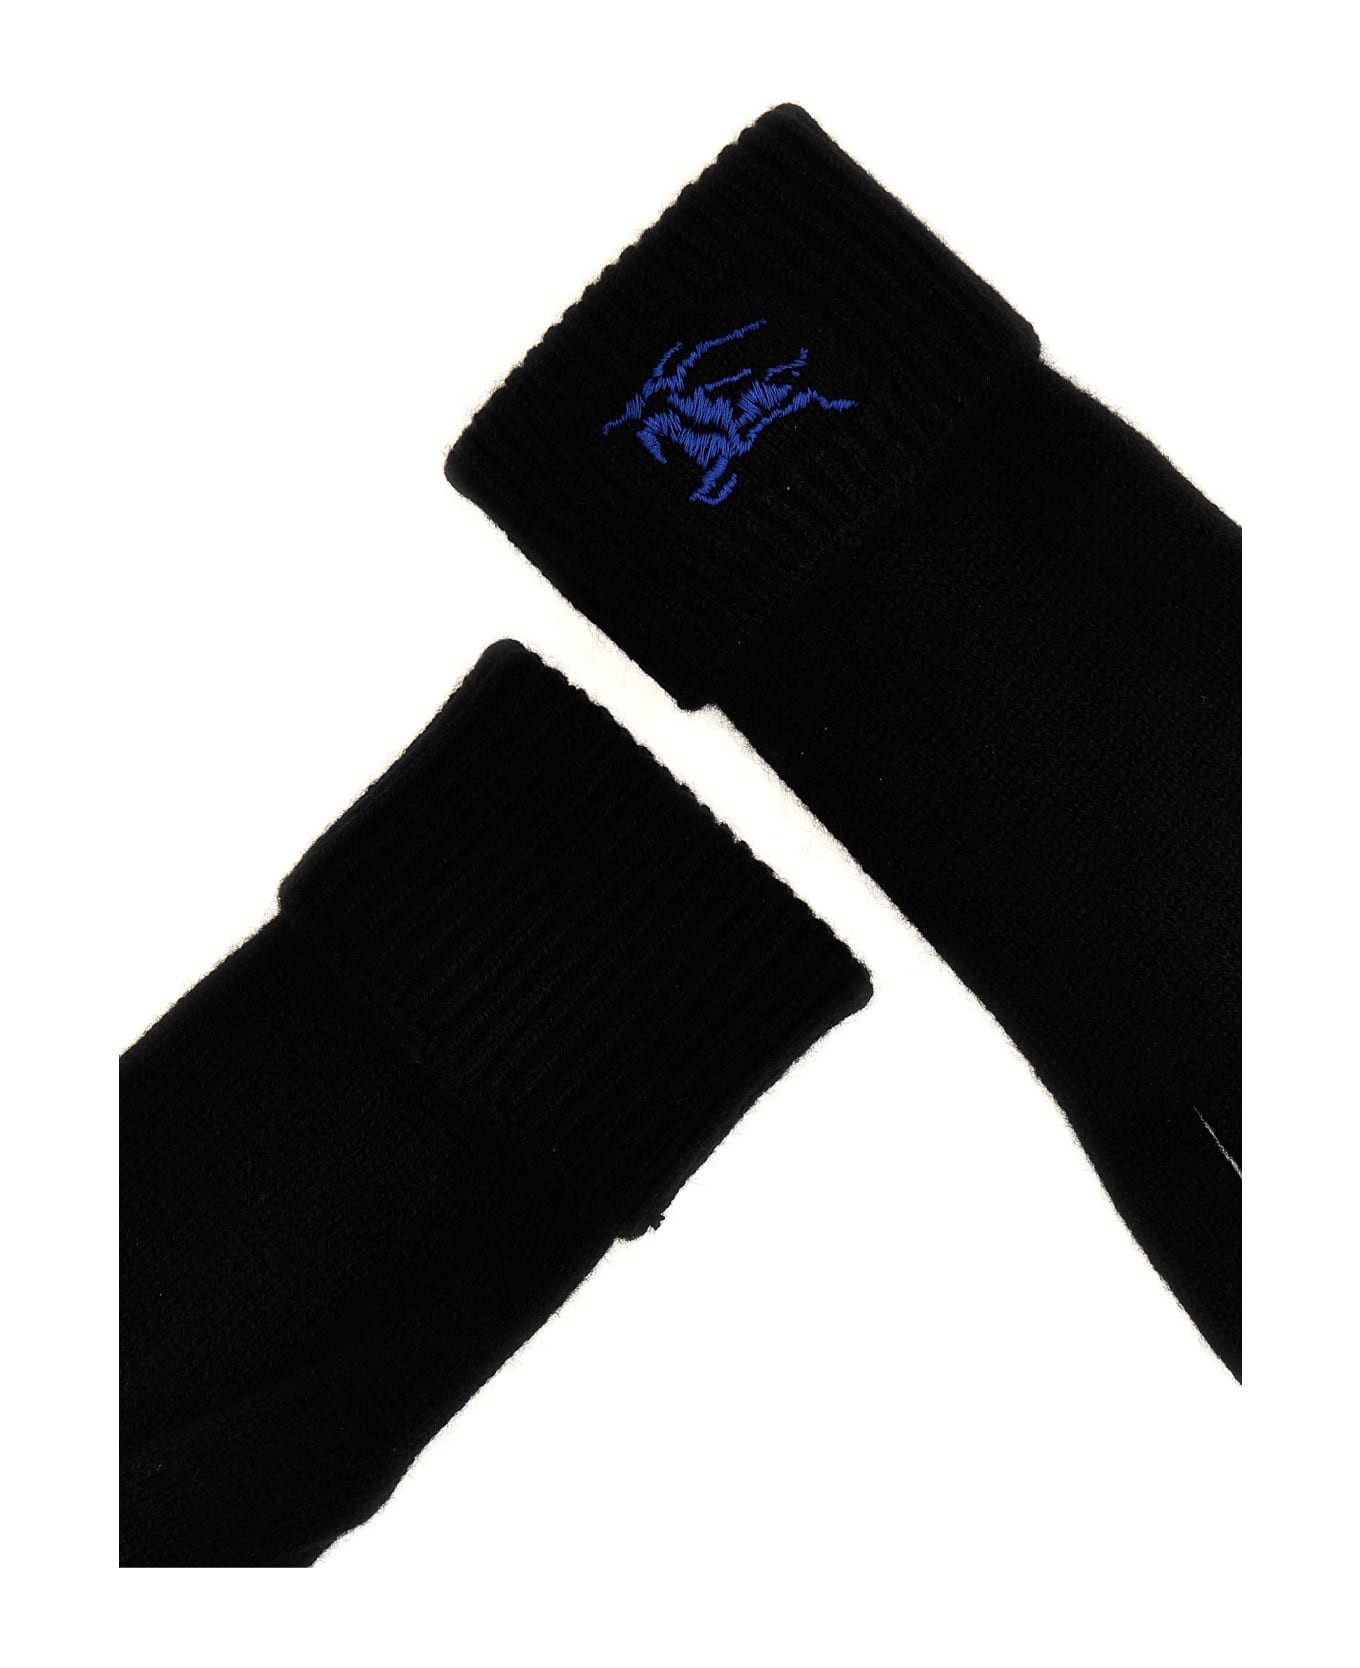 Burberry 'equestrian Knight Design' Gloves - Black  